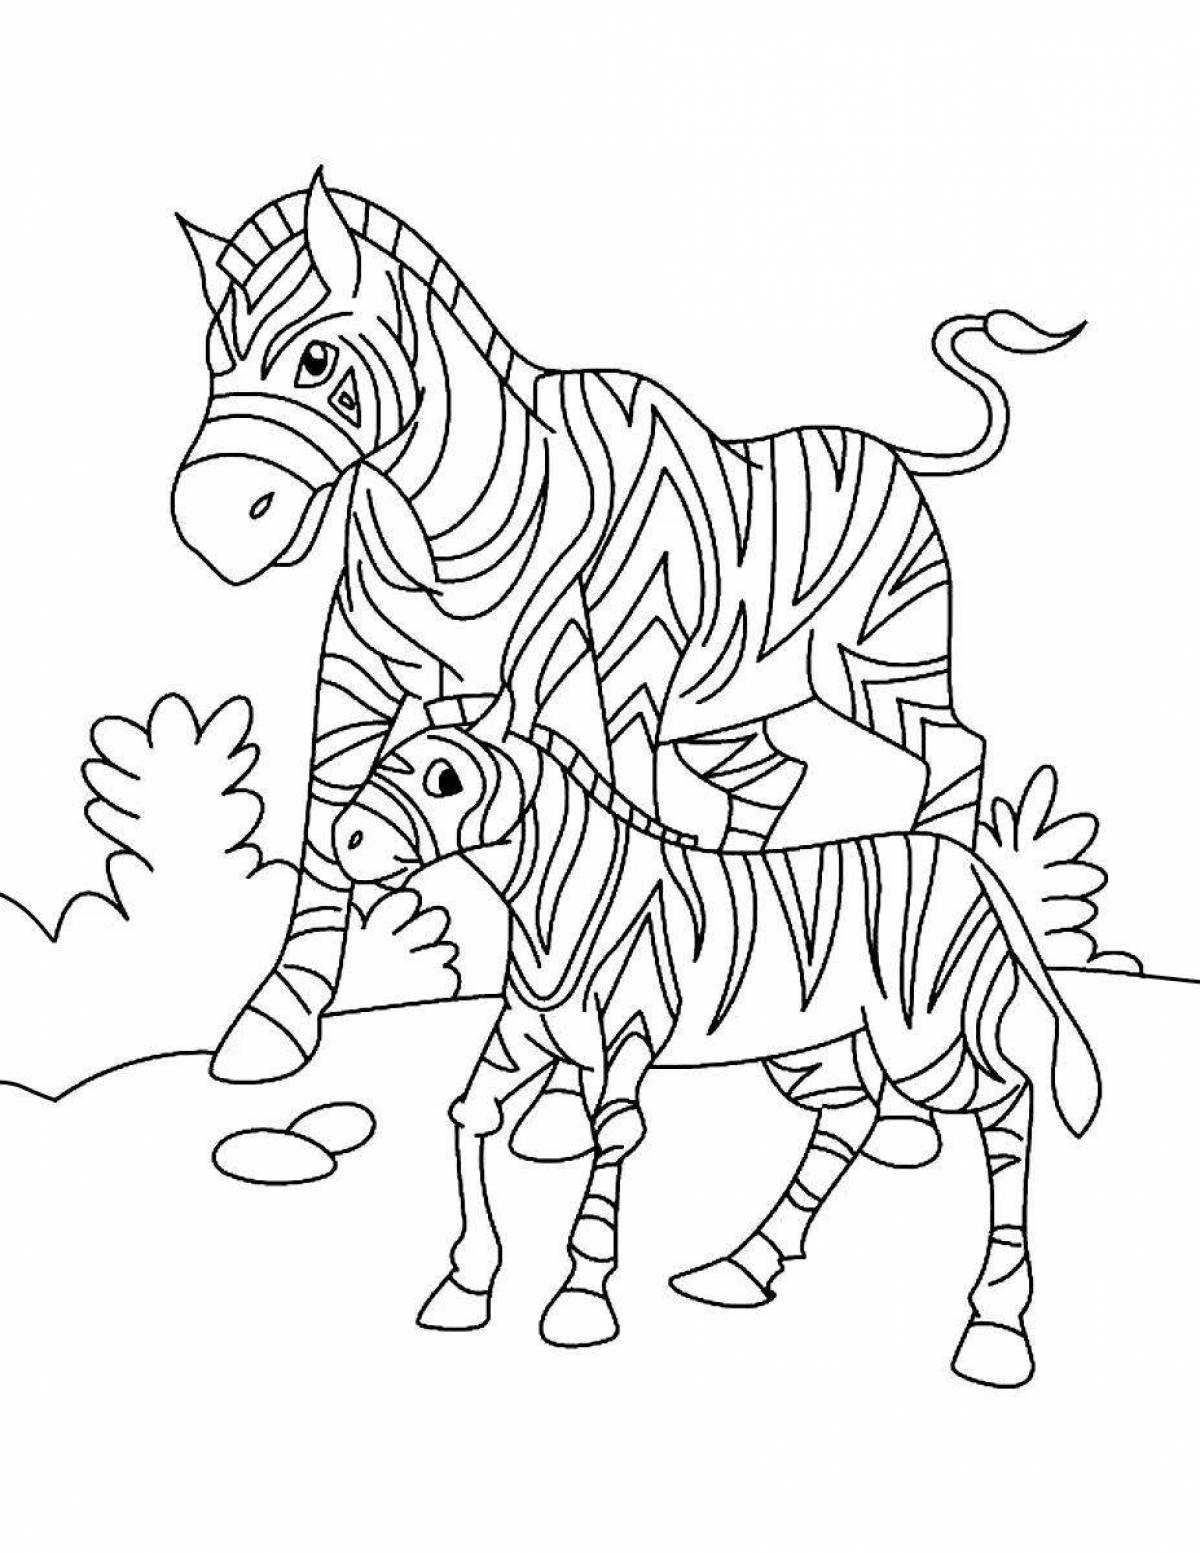 Забавный рисунок зебры